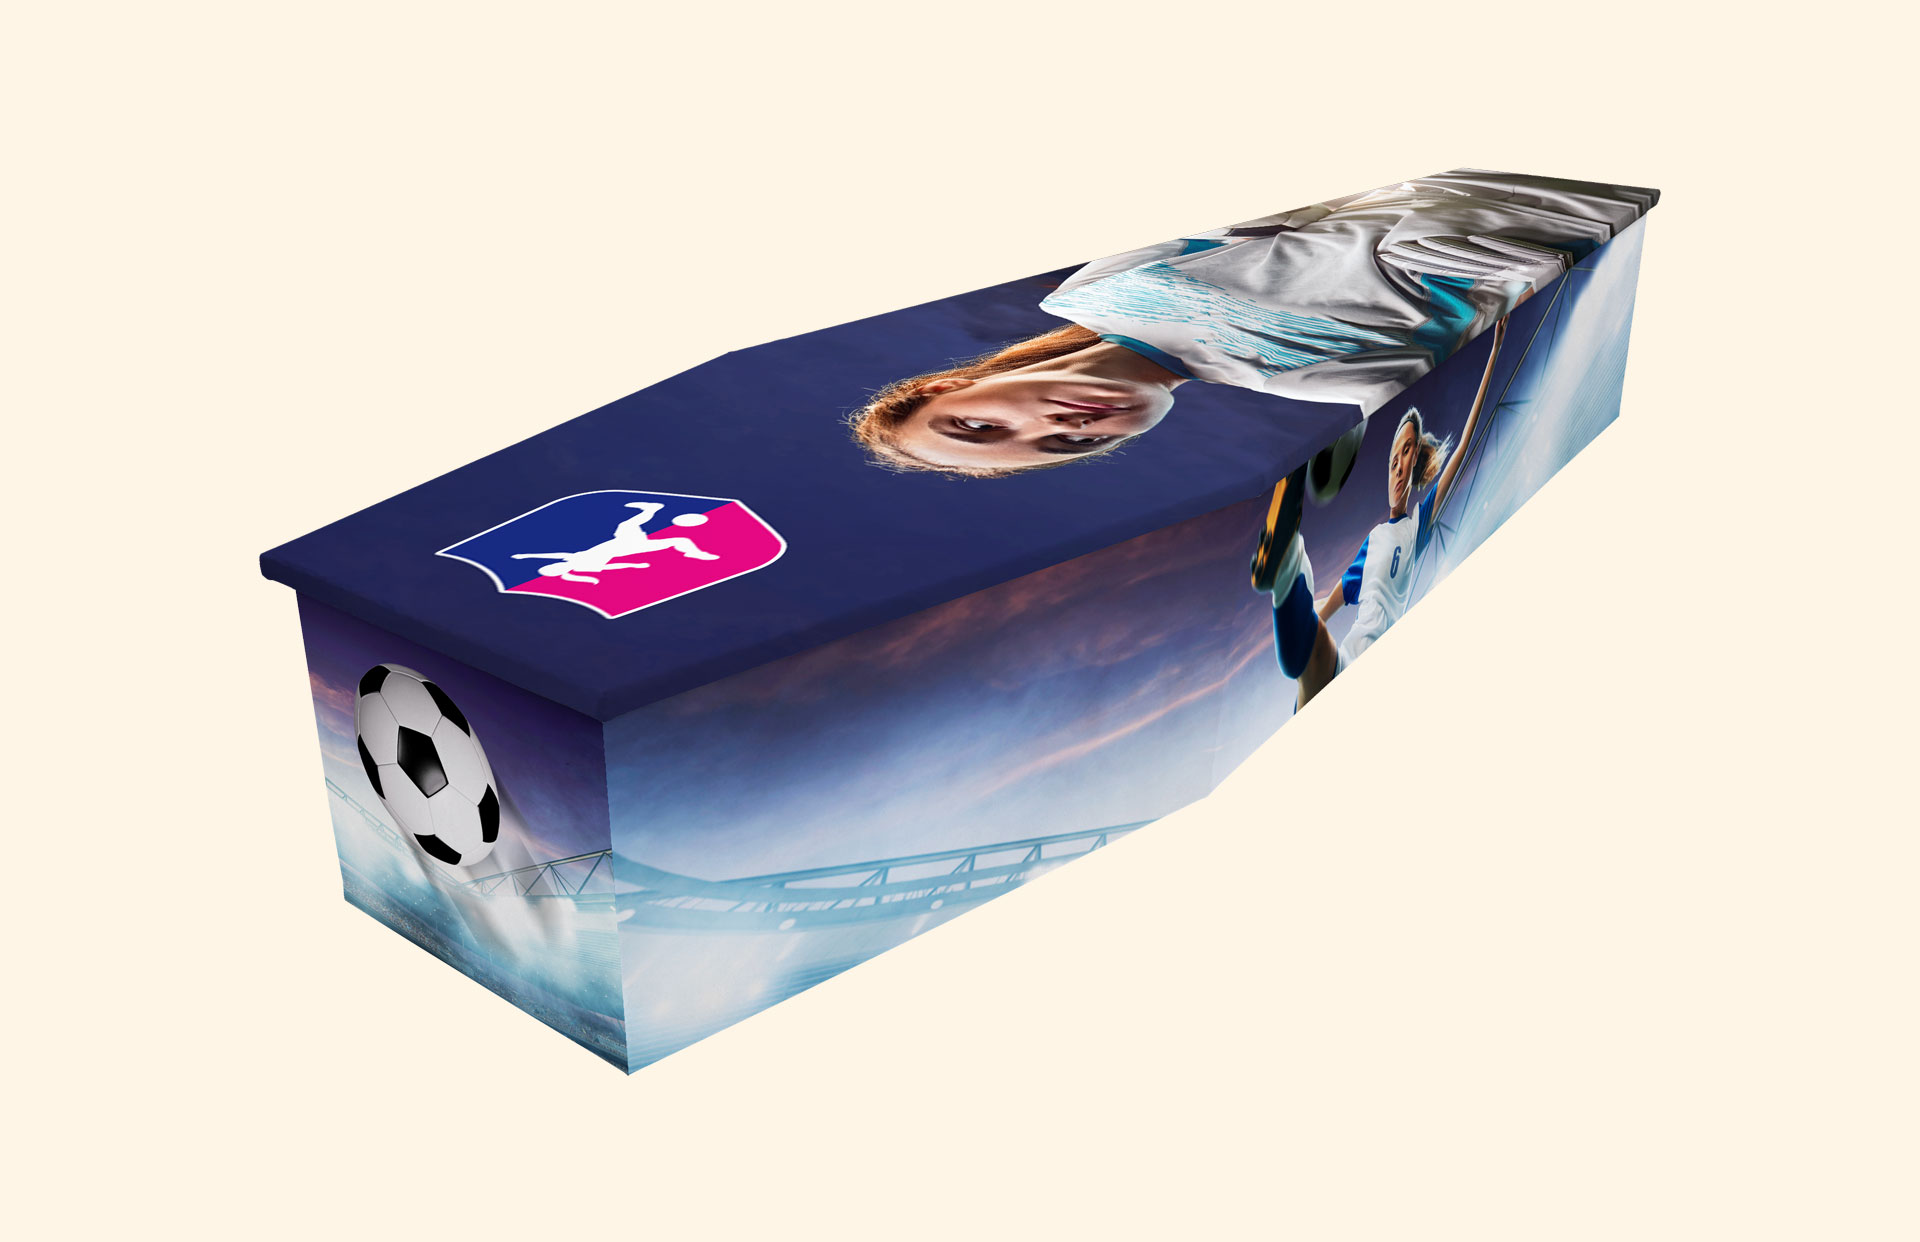 Girls League design on a cardboard coffin